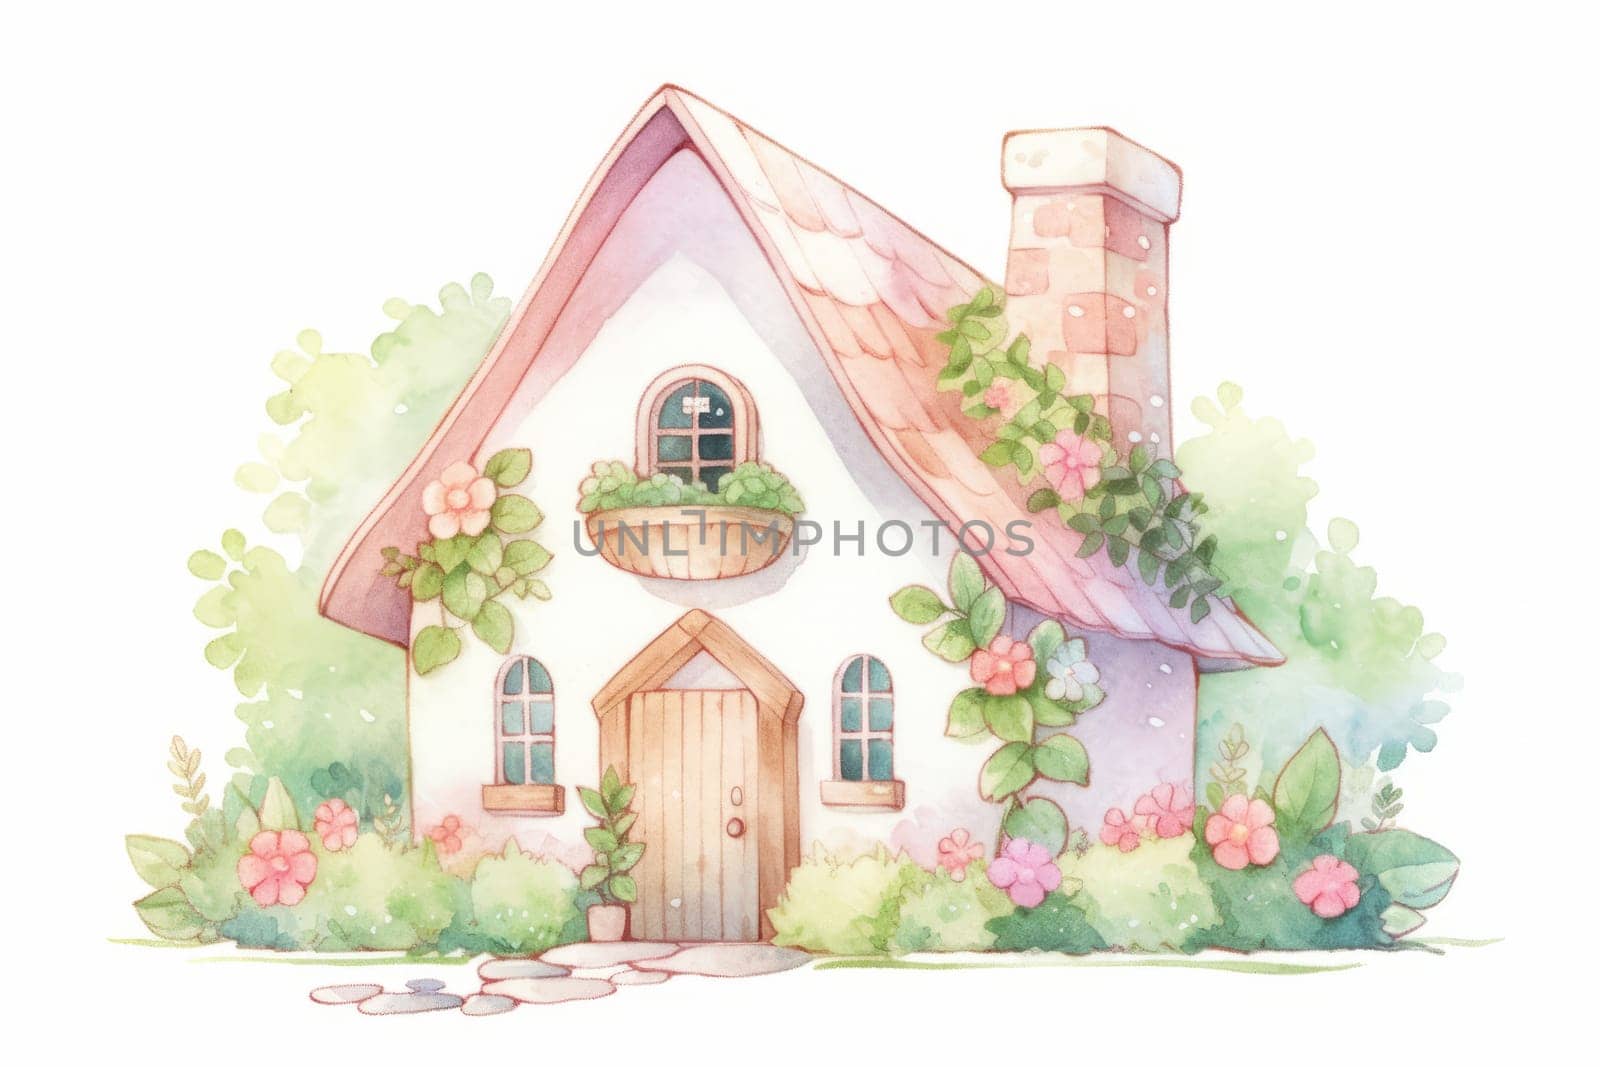 Cute cozy house hand drawn watercolor illustration. by Artsiom